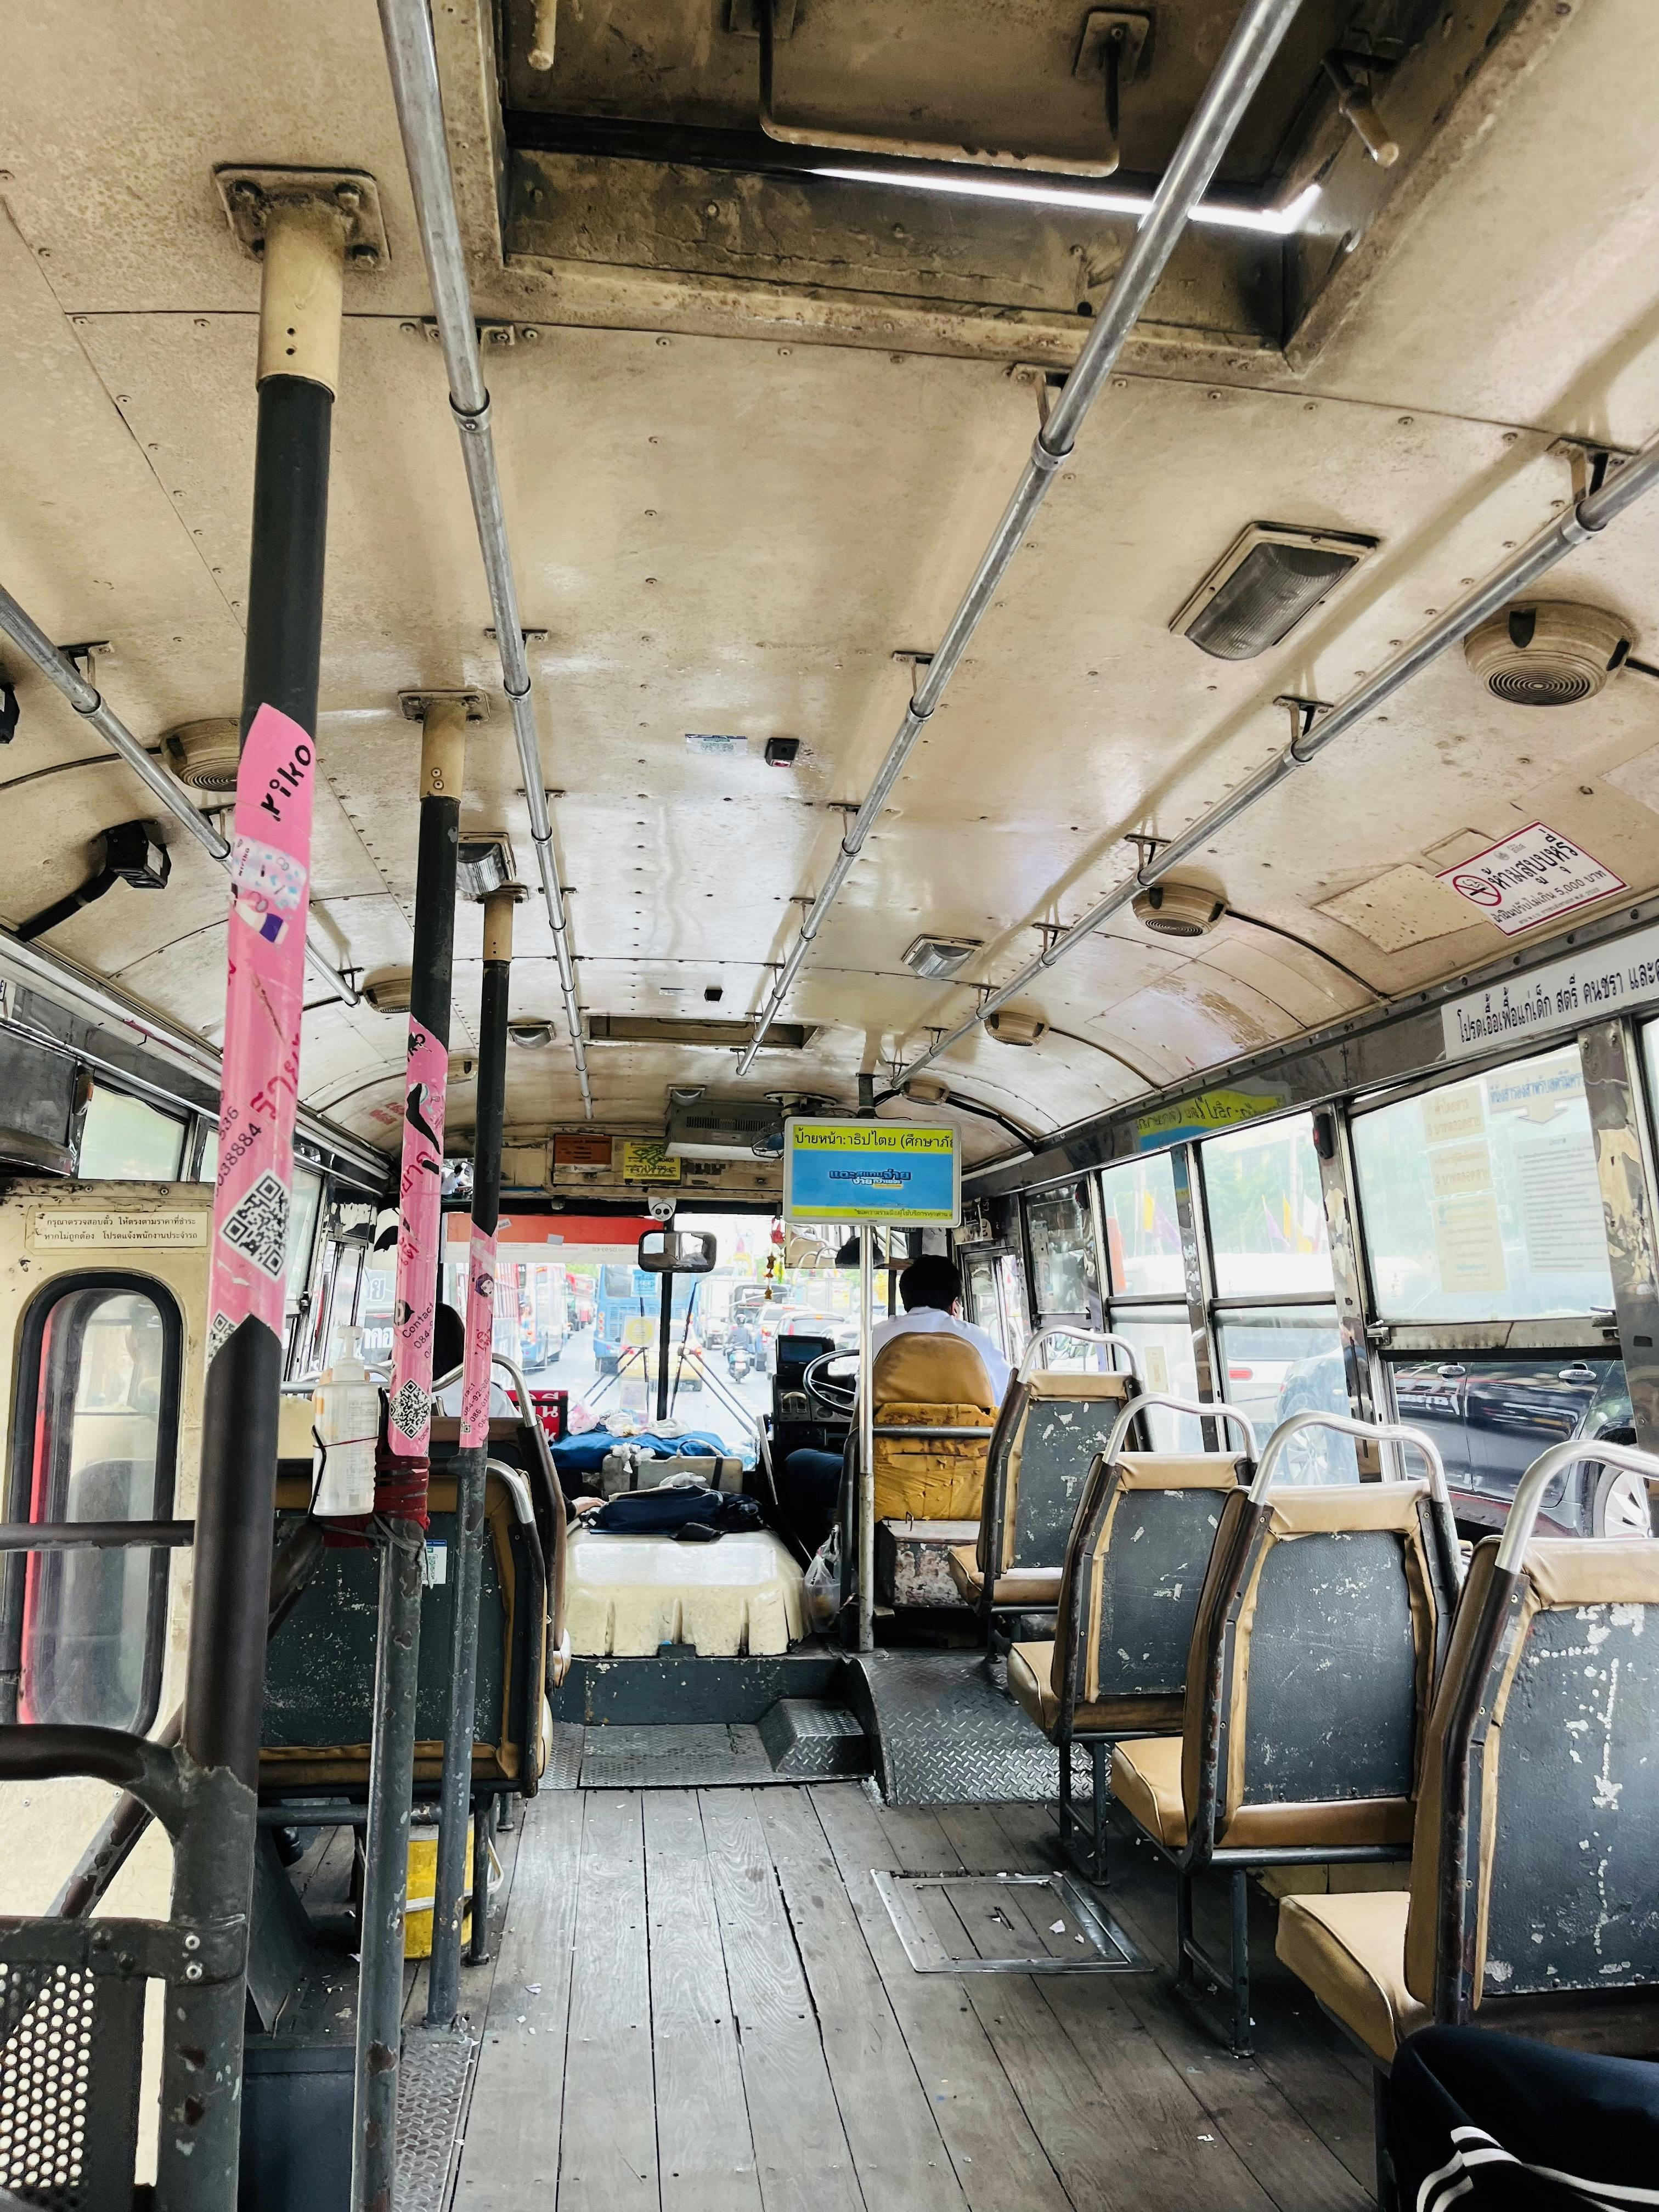 A regular bus in Bangkok